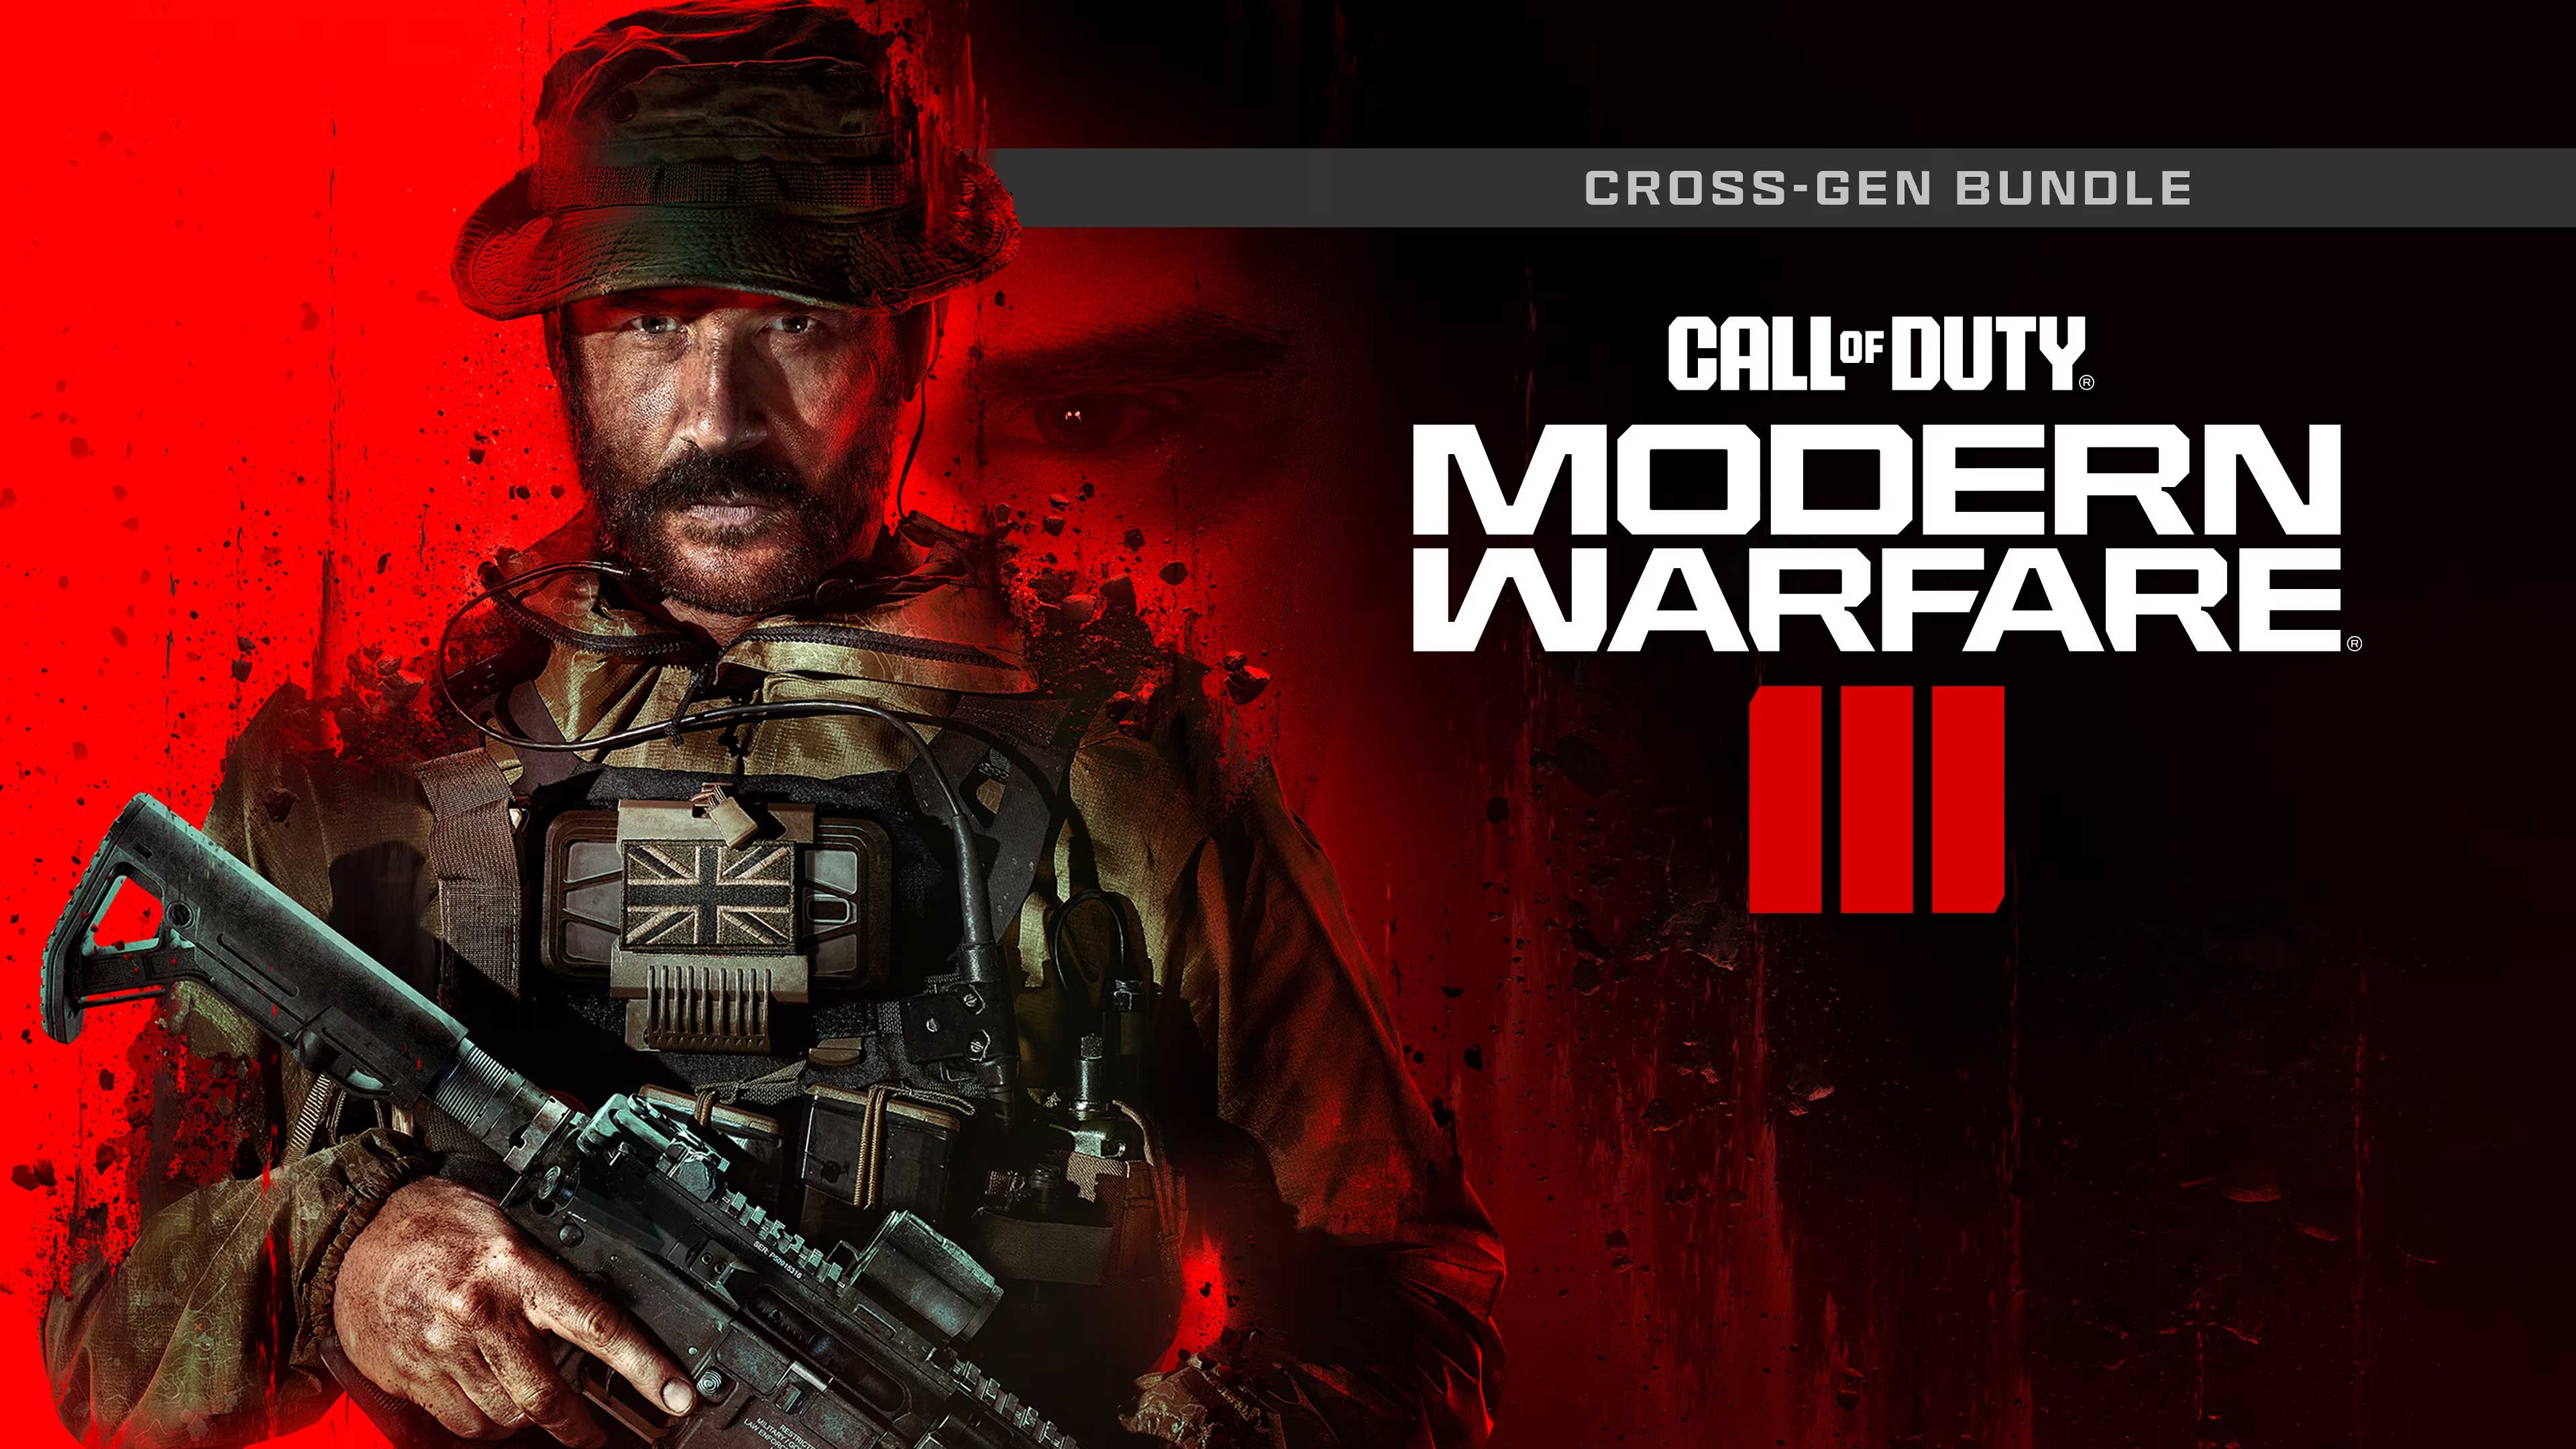 Call of Duty: Modern Warfare III - Cross-Gen Bundle, The Games Pub, thegamespub.com